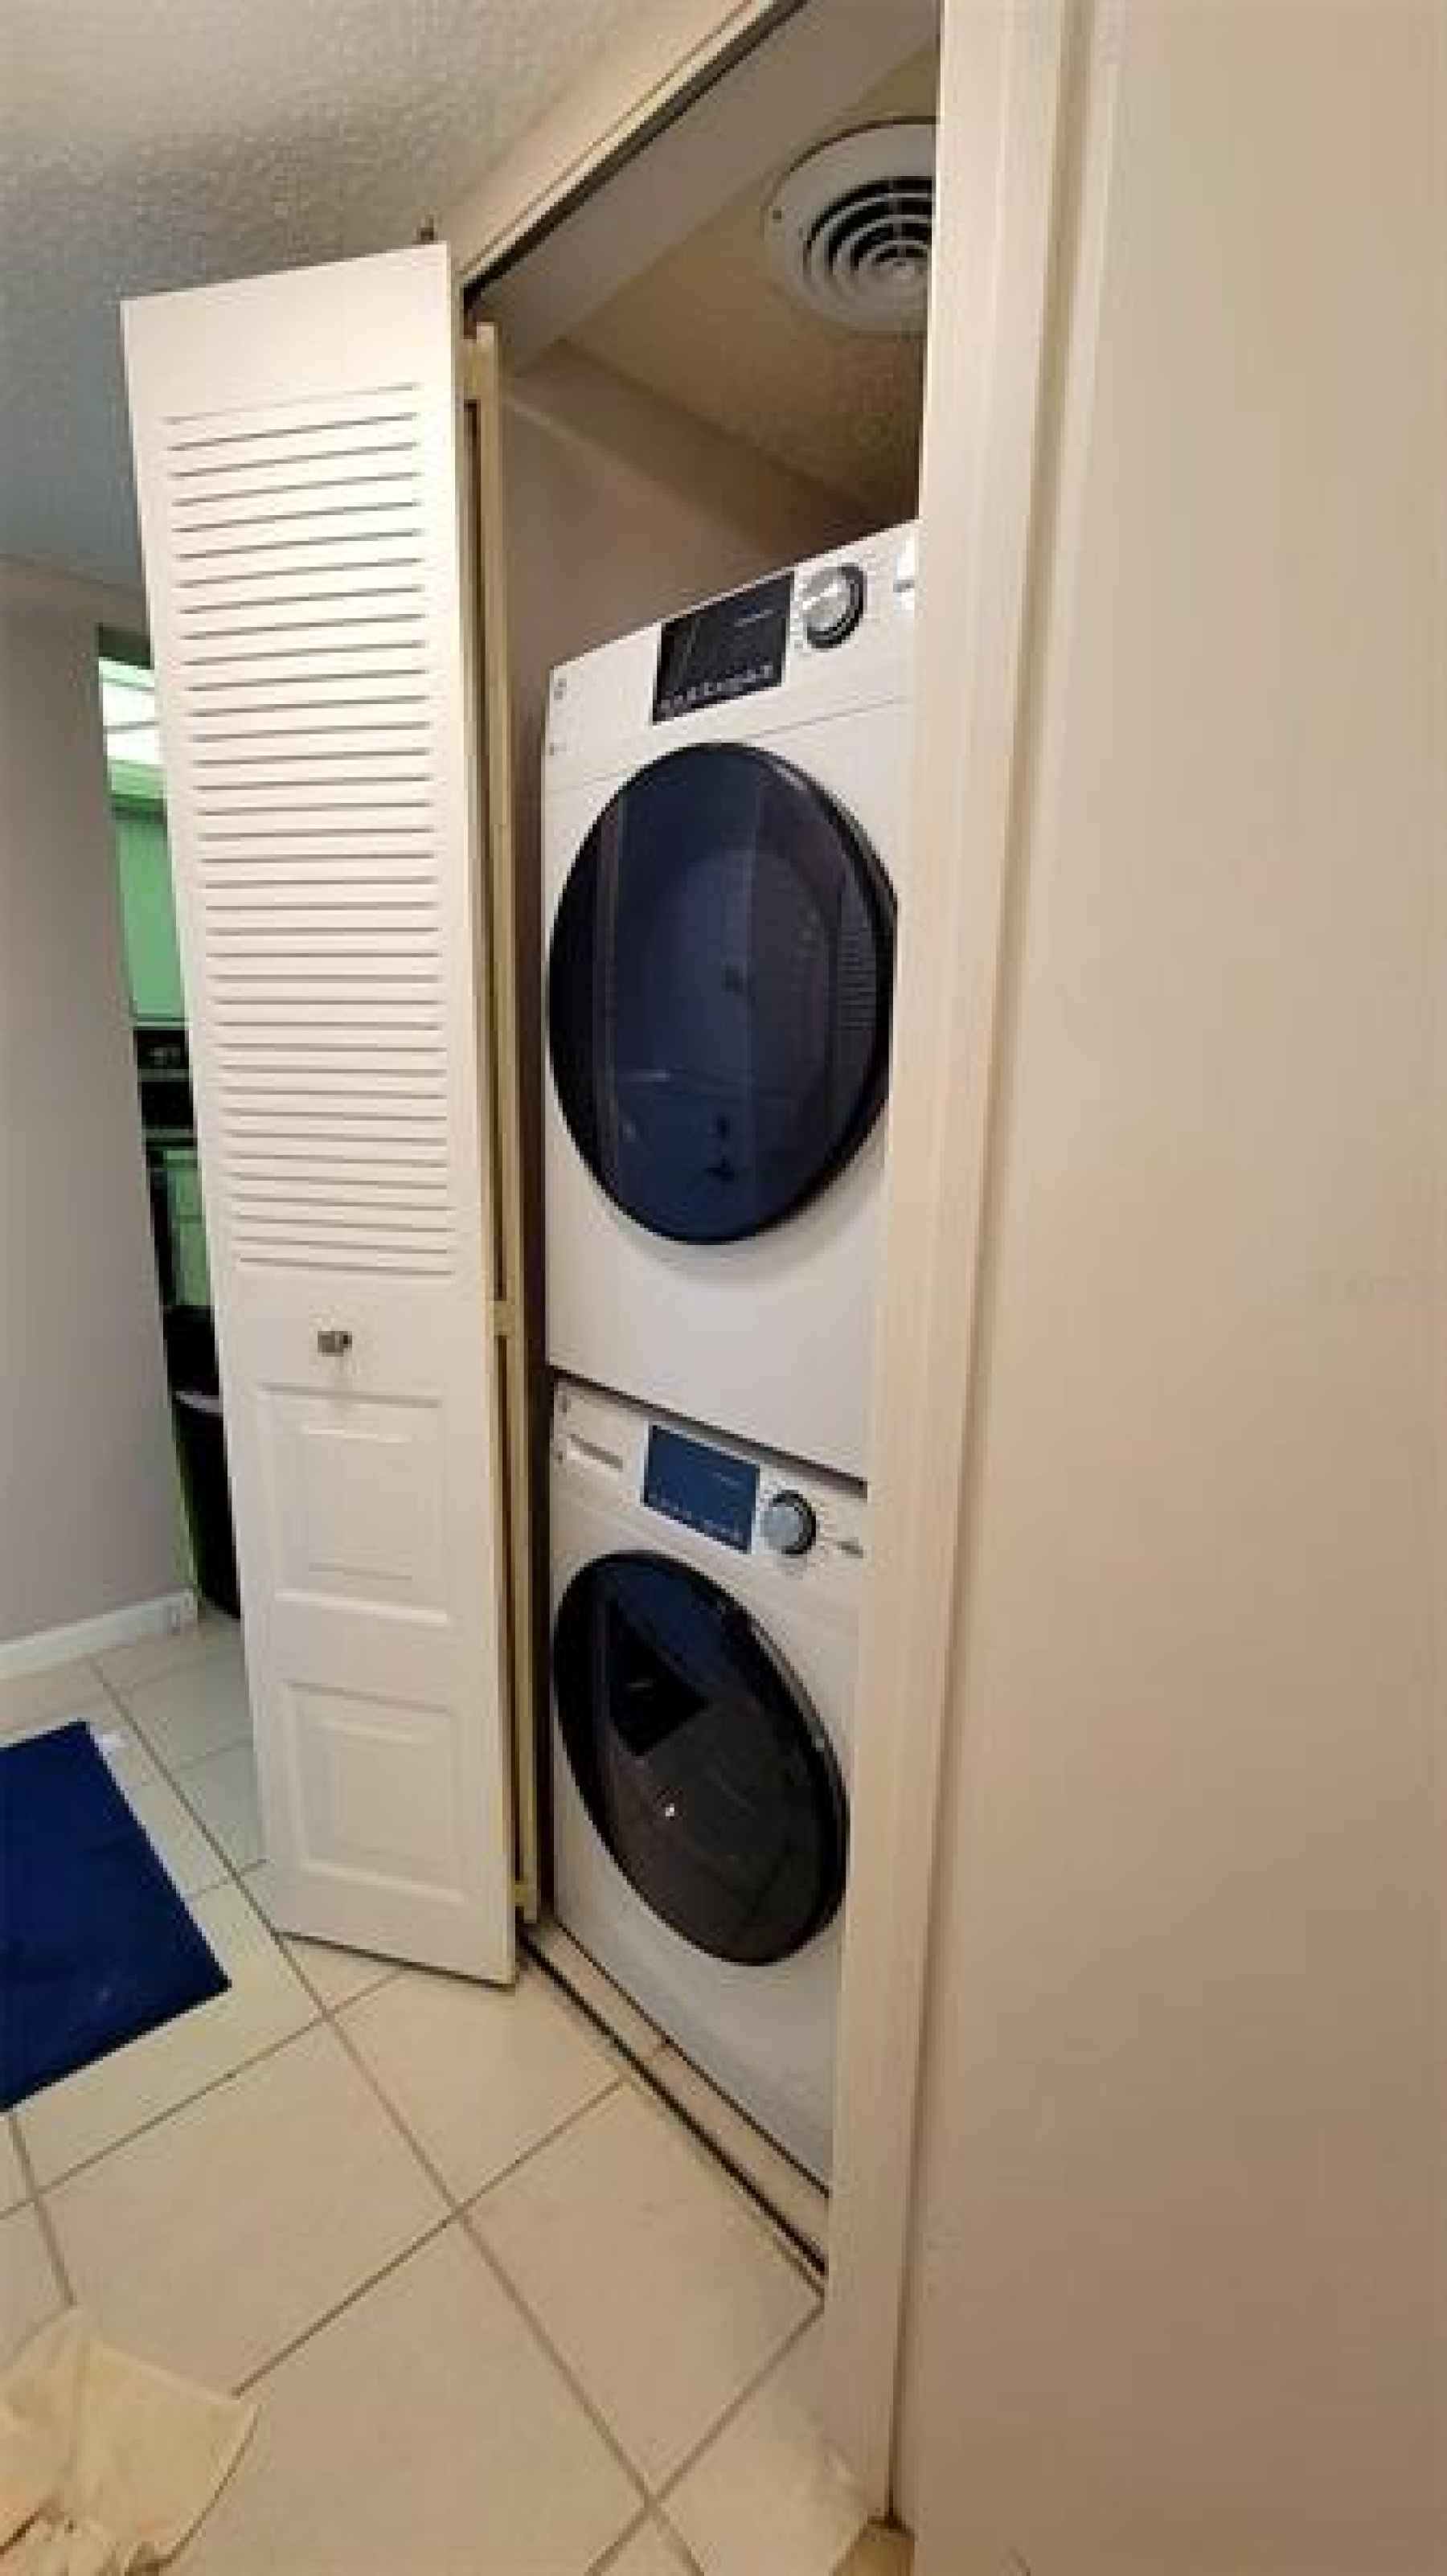 2021 Washer/Dryer in hallway by half bathroom.